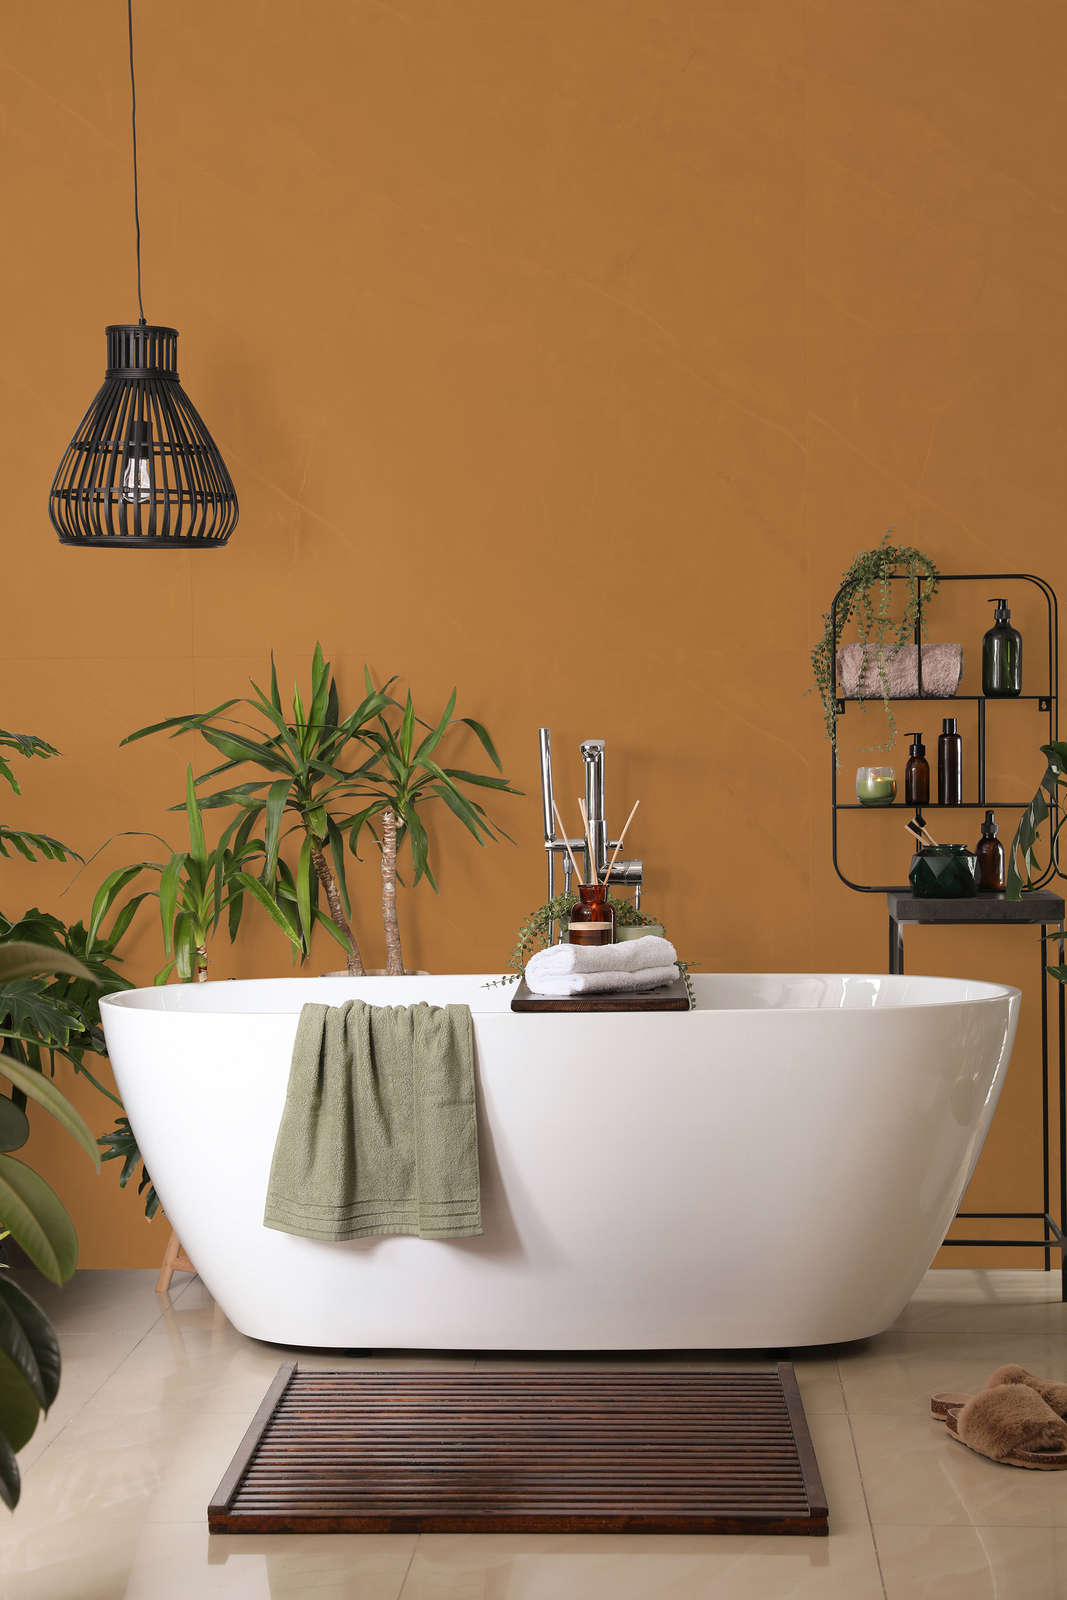             Peinture murale Premium brun clair intense »Beige Orange/Sassy Saffron« NW814 – 2,5 litres
        